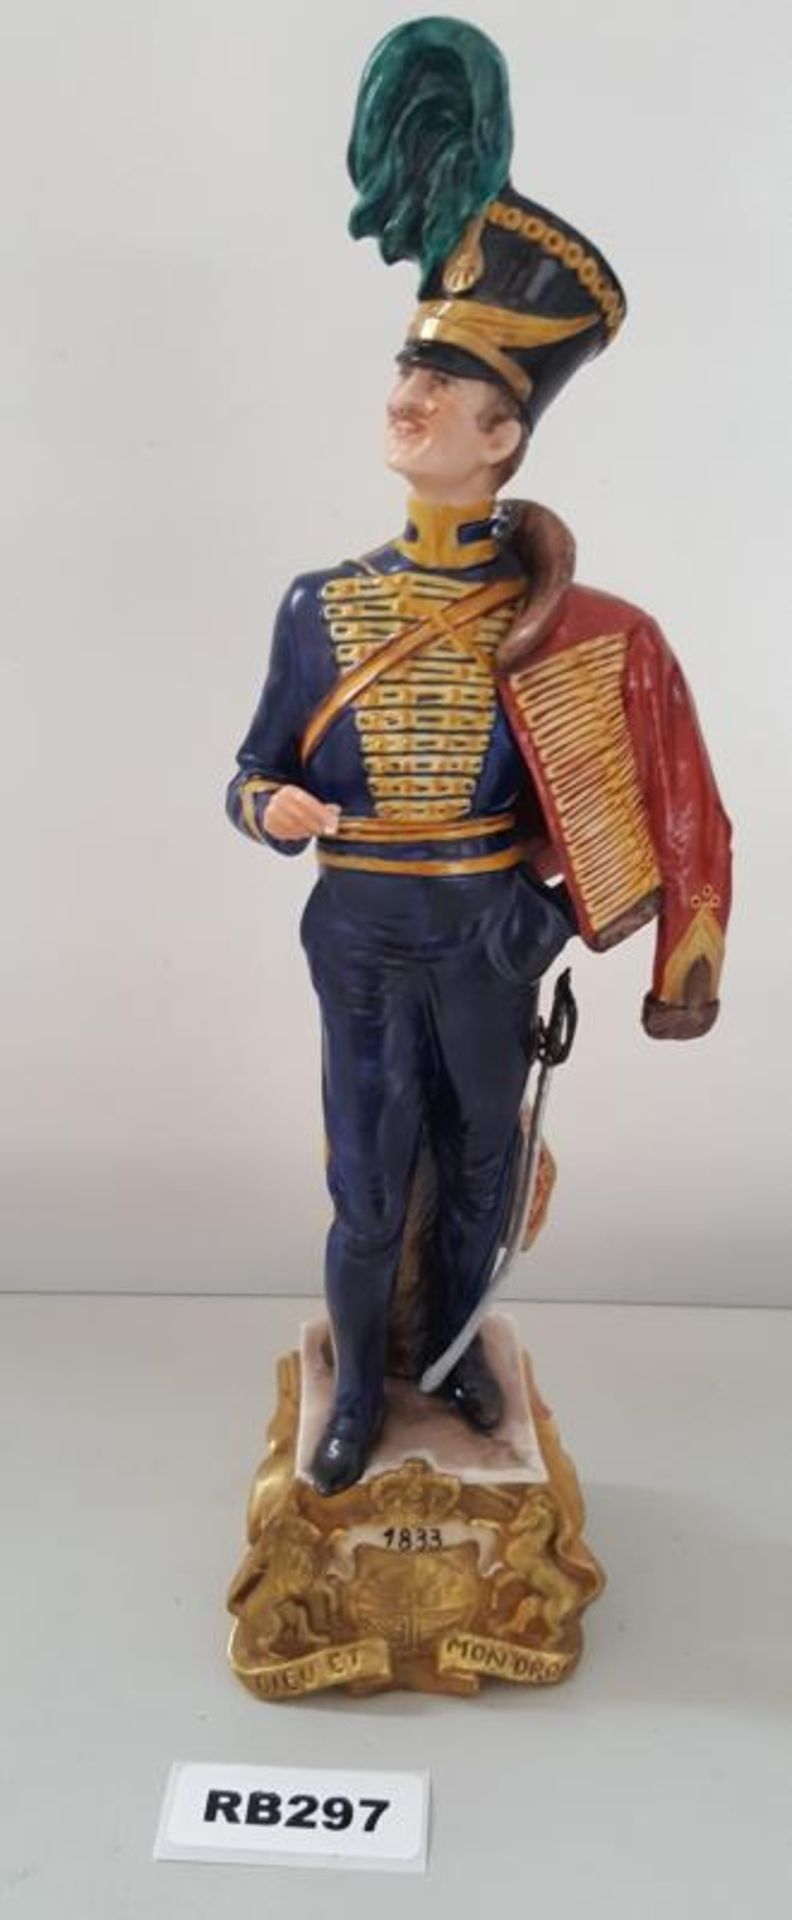 1 x Rare Italian Capodimonte Porcelain Bruno Merli Soldiers Figurines 1833- Ref RB297 E